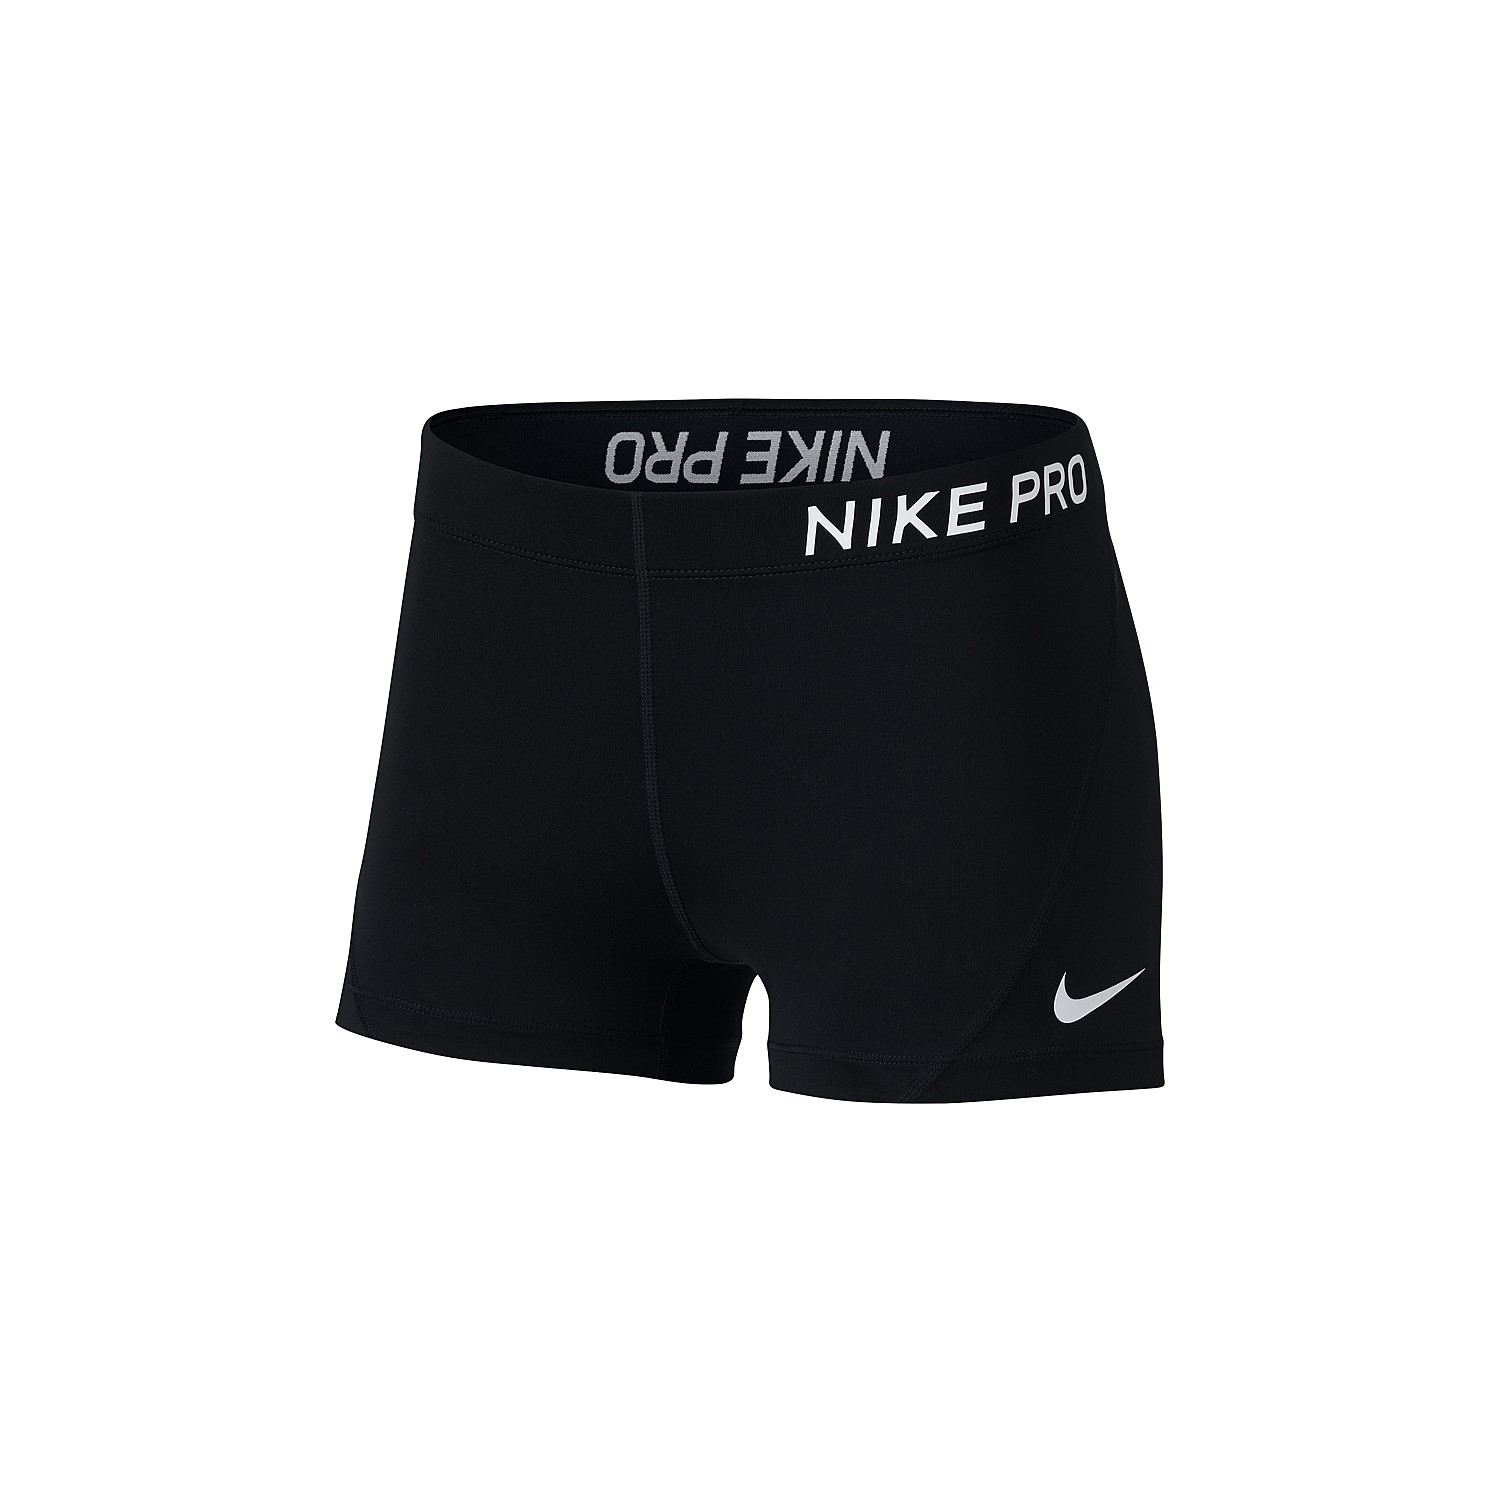 nike skins shorts